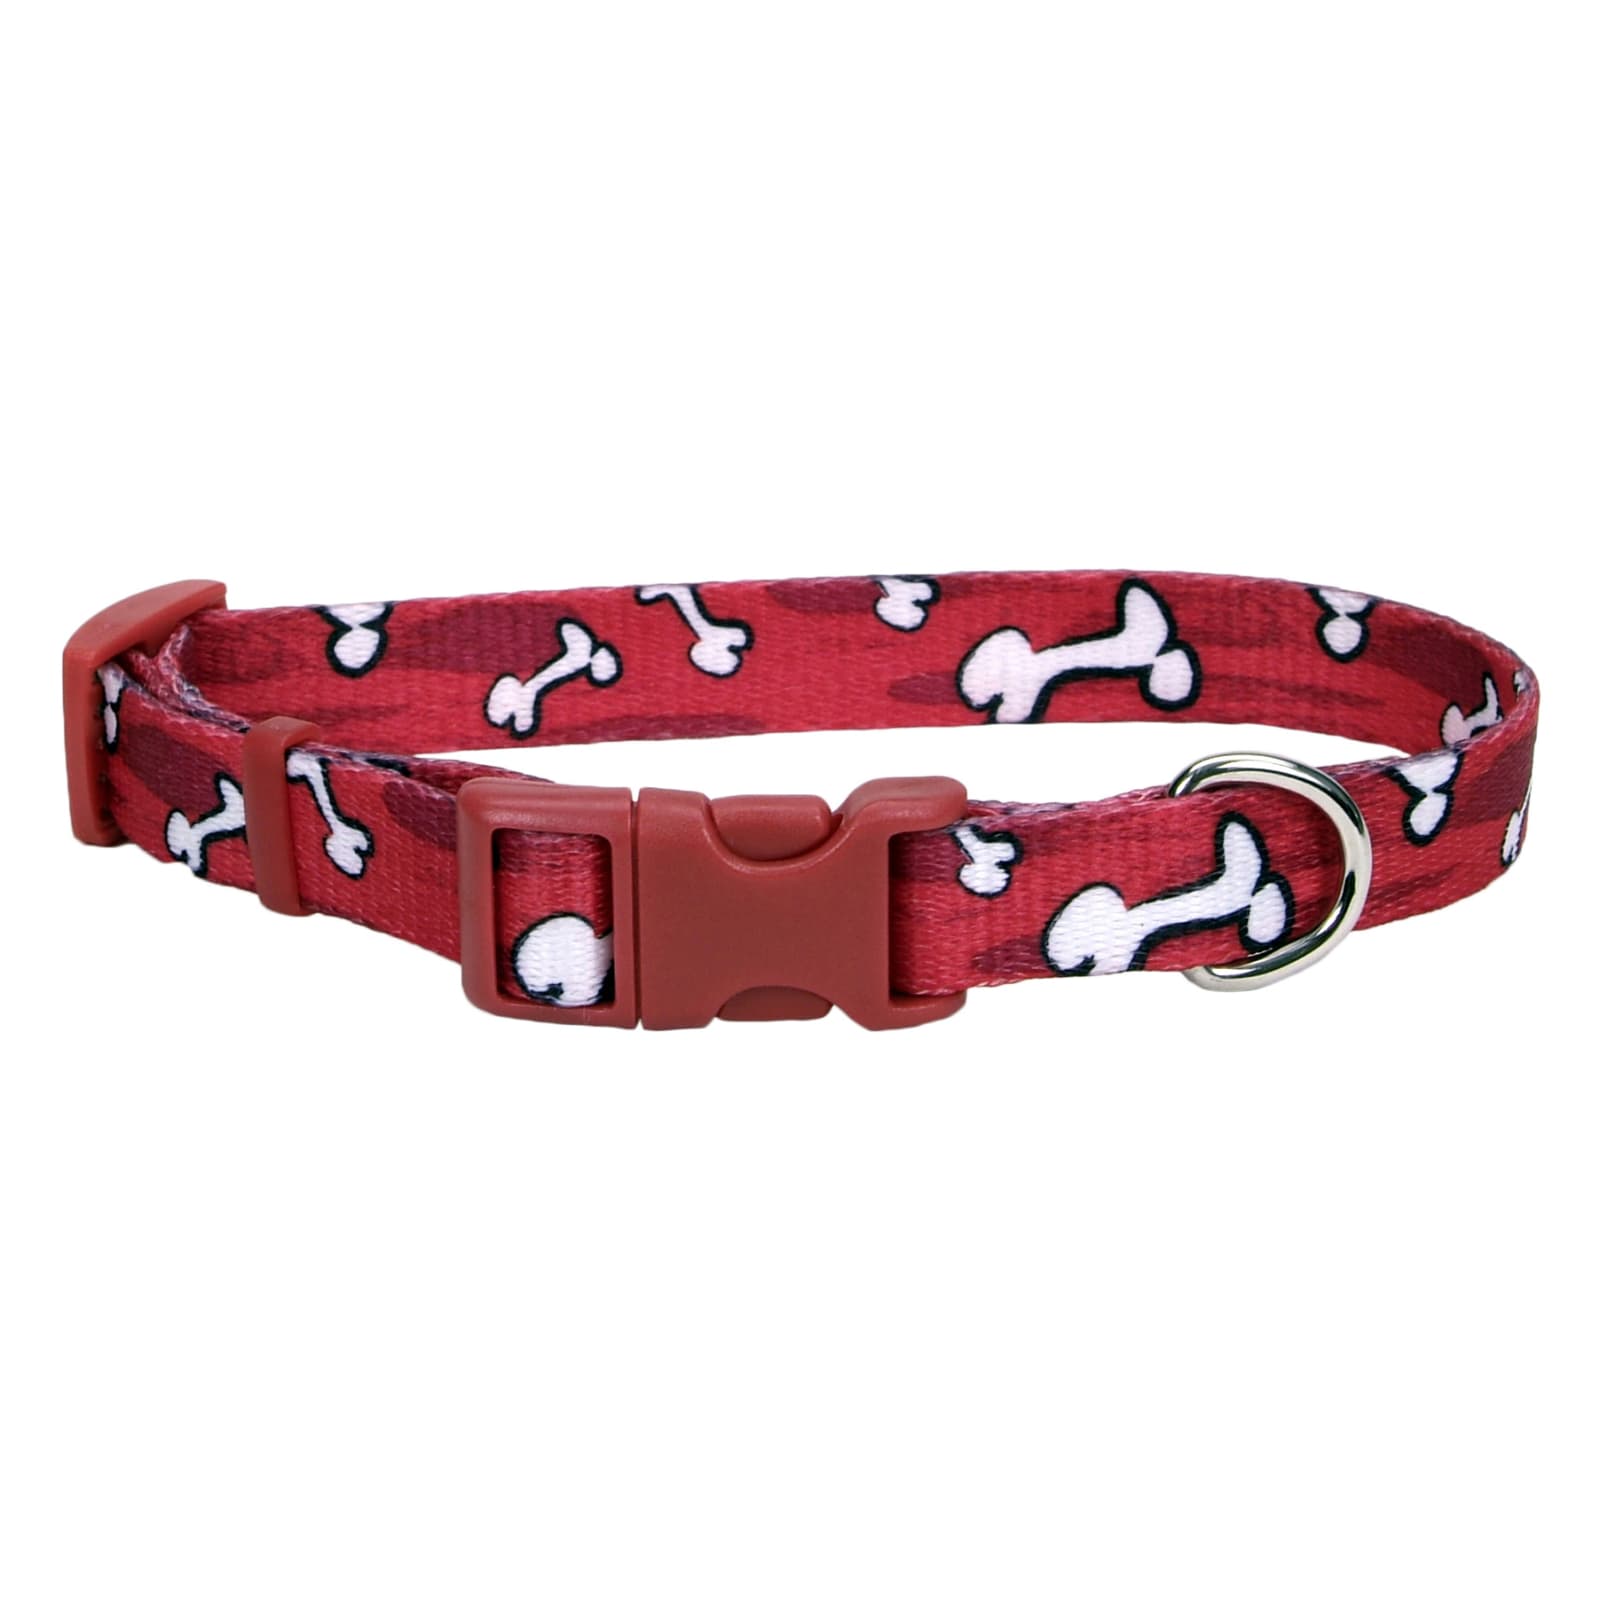 Pet Attire Styles Adjustable Collar 5/8 - Red Bones